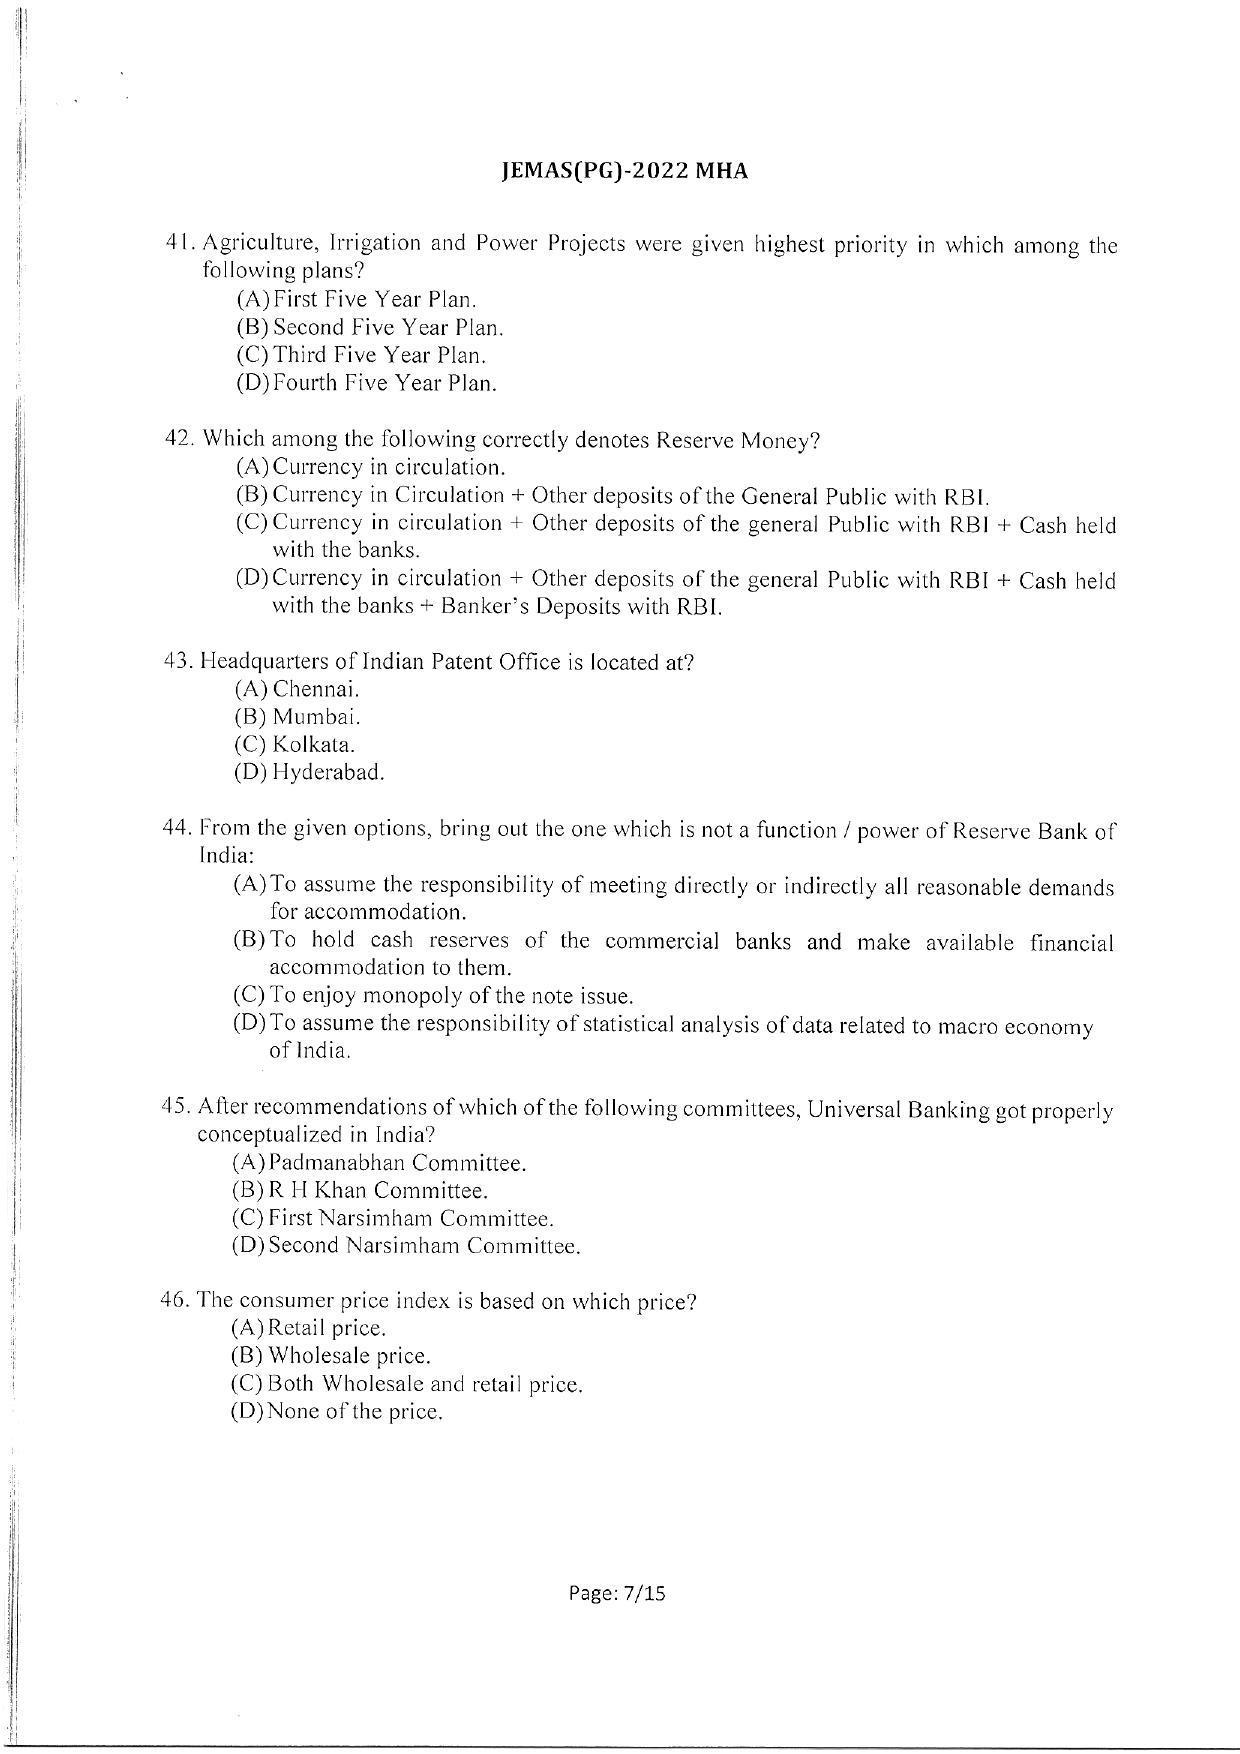 WBJEEB JEMAS (PG) 2022 MHA Question Paper - Page 9